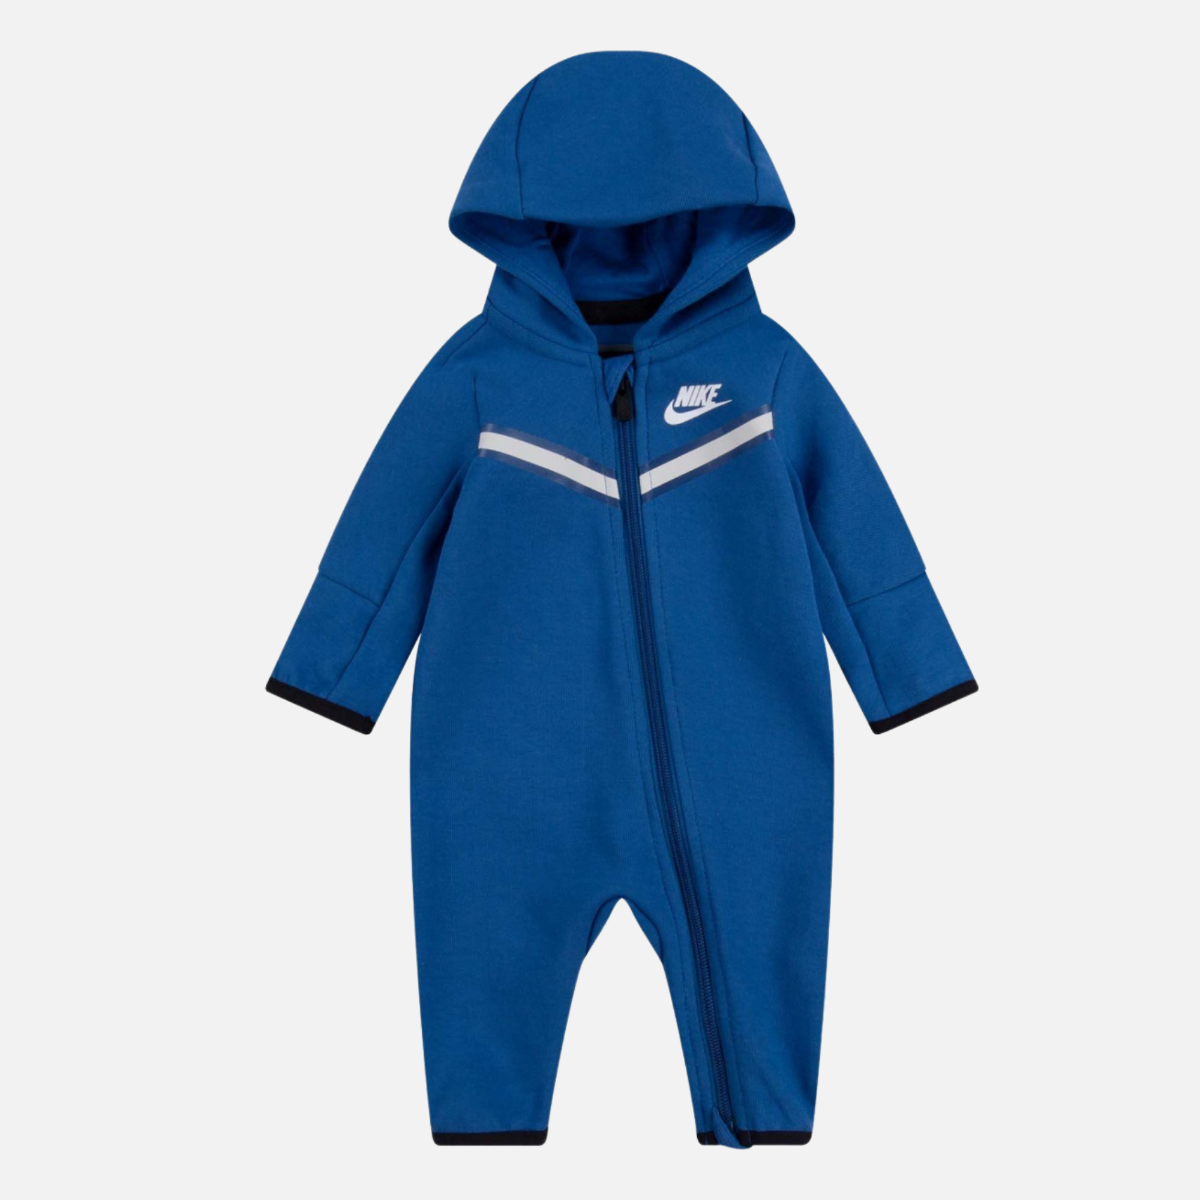 Combinaison  Nike Sportswear Coverall Bébé - Bleu/Blanc